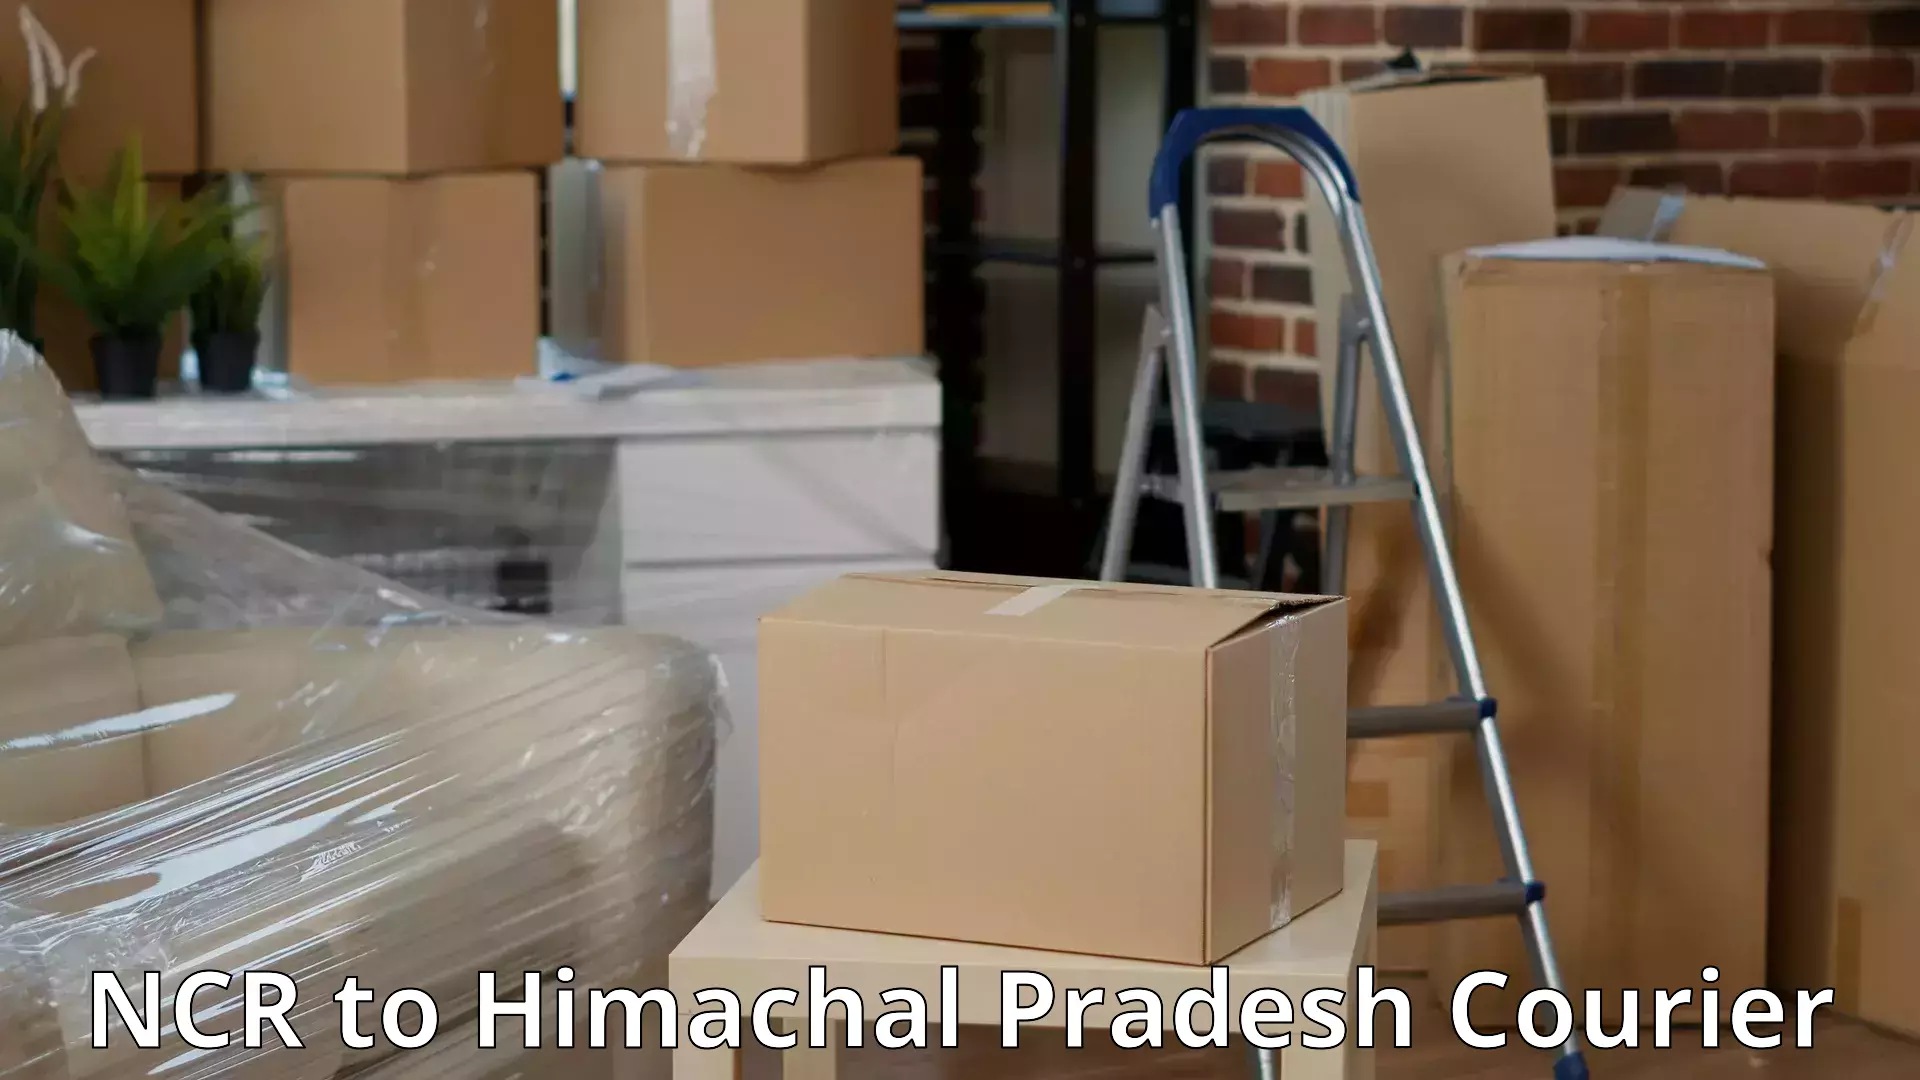 Quality moving company NCR to Himachal Pradesh